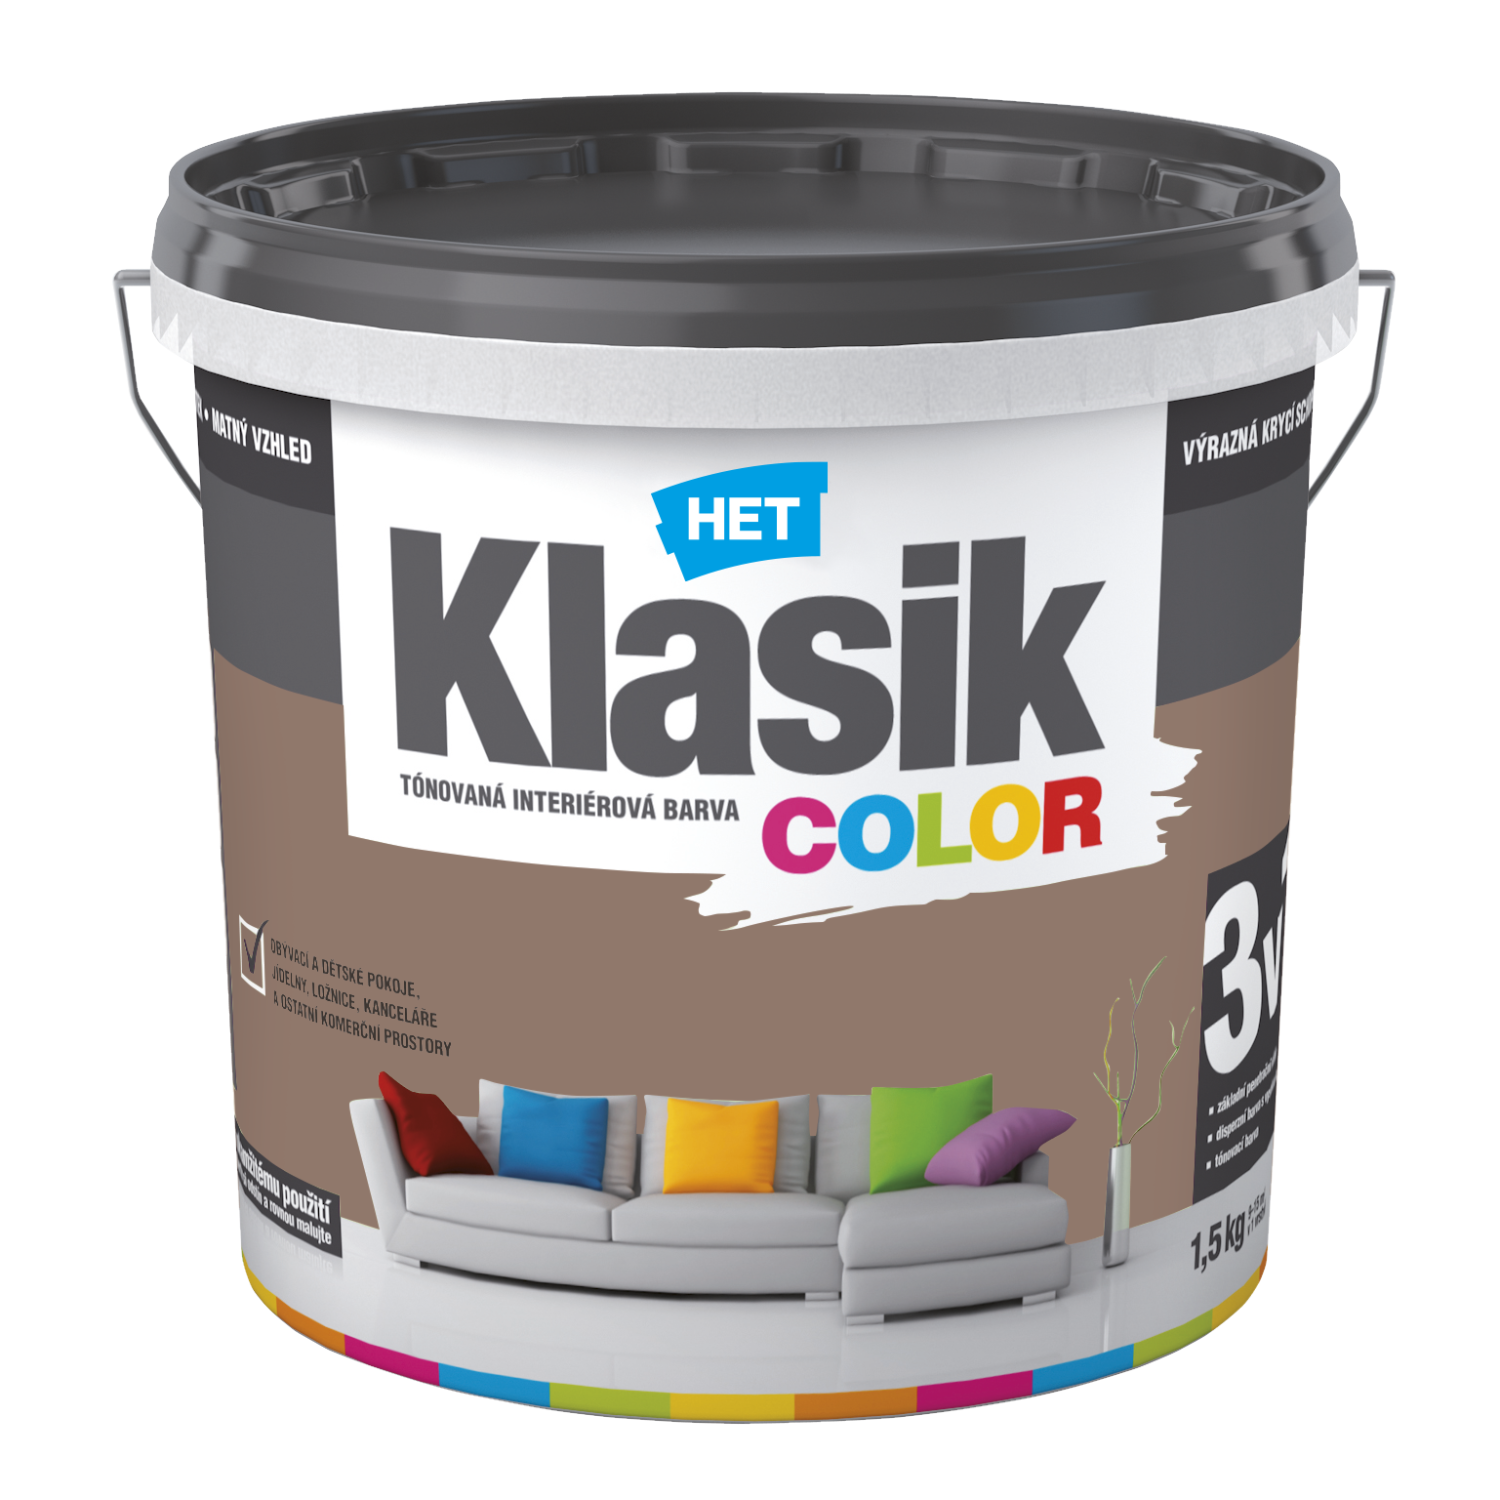 HET Klasik COLOR tónovaná interiérová akrylátová disperzná oteruvzdorná farba 1,5 kg, KC0297 - hnedý nugátový